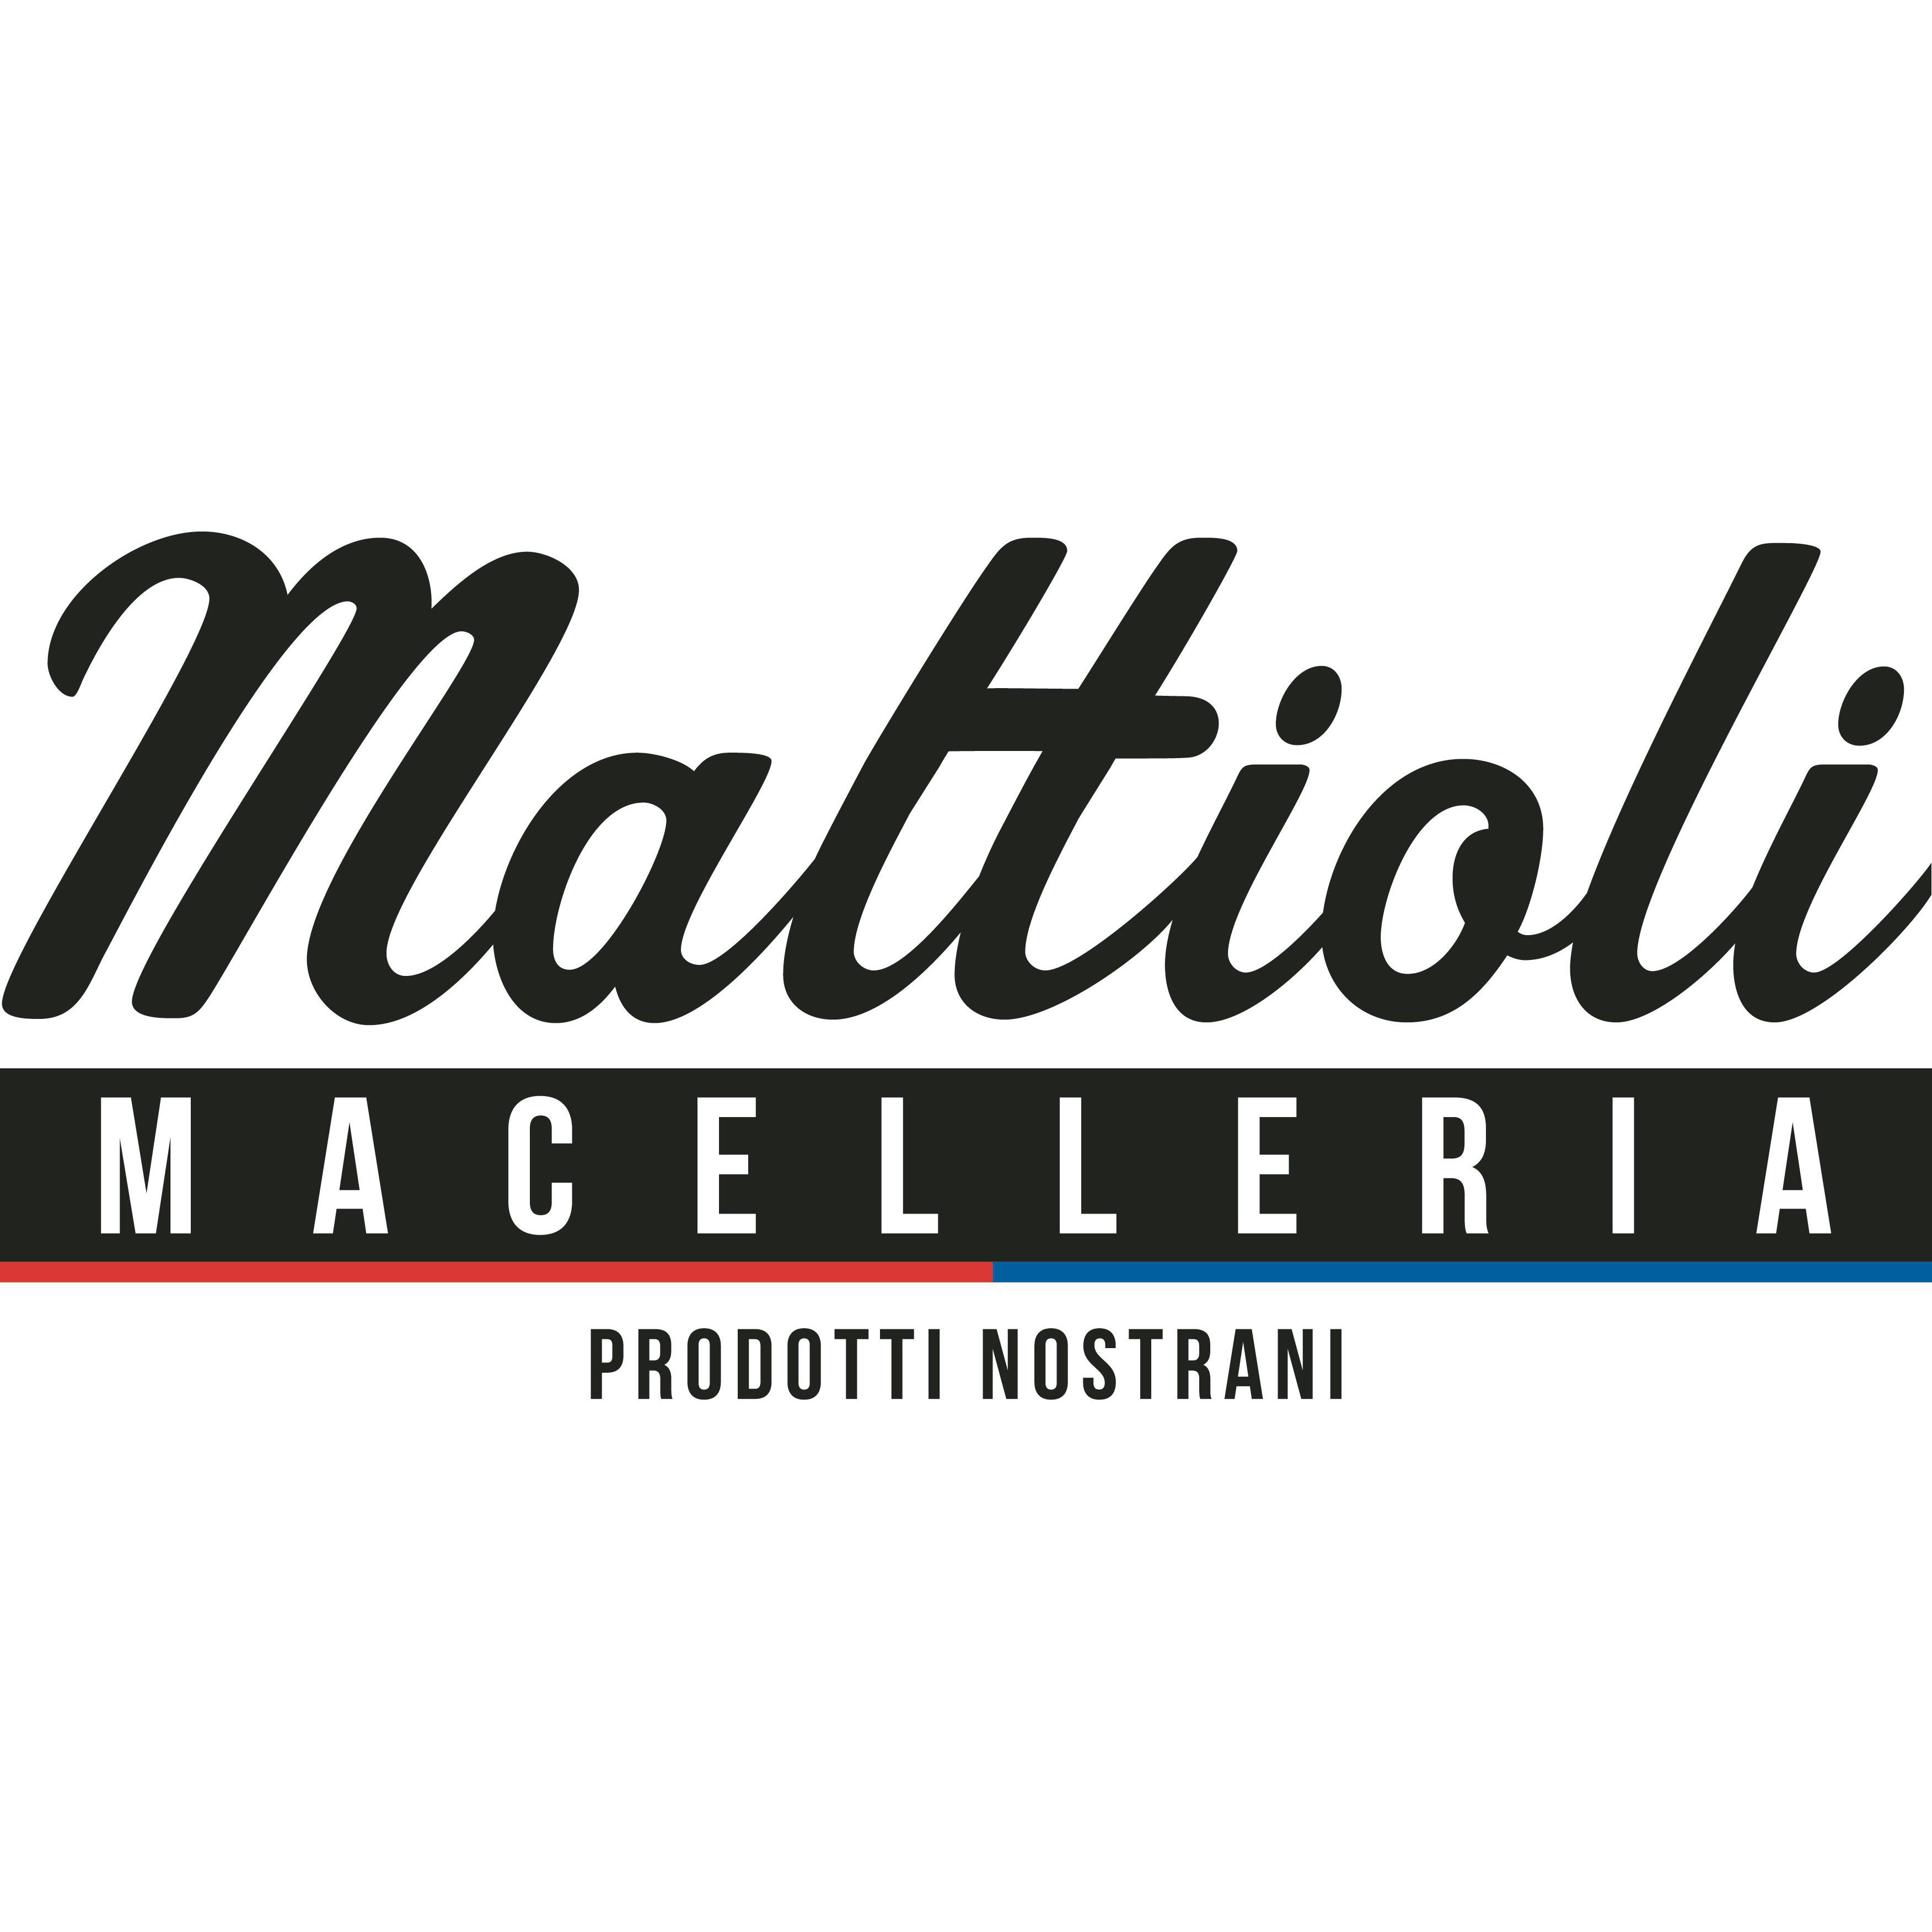 Macelleria Mattioli Logo